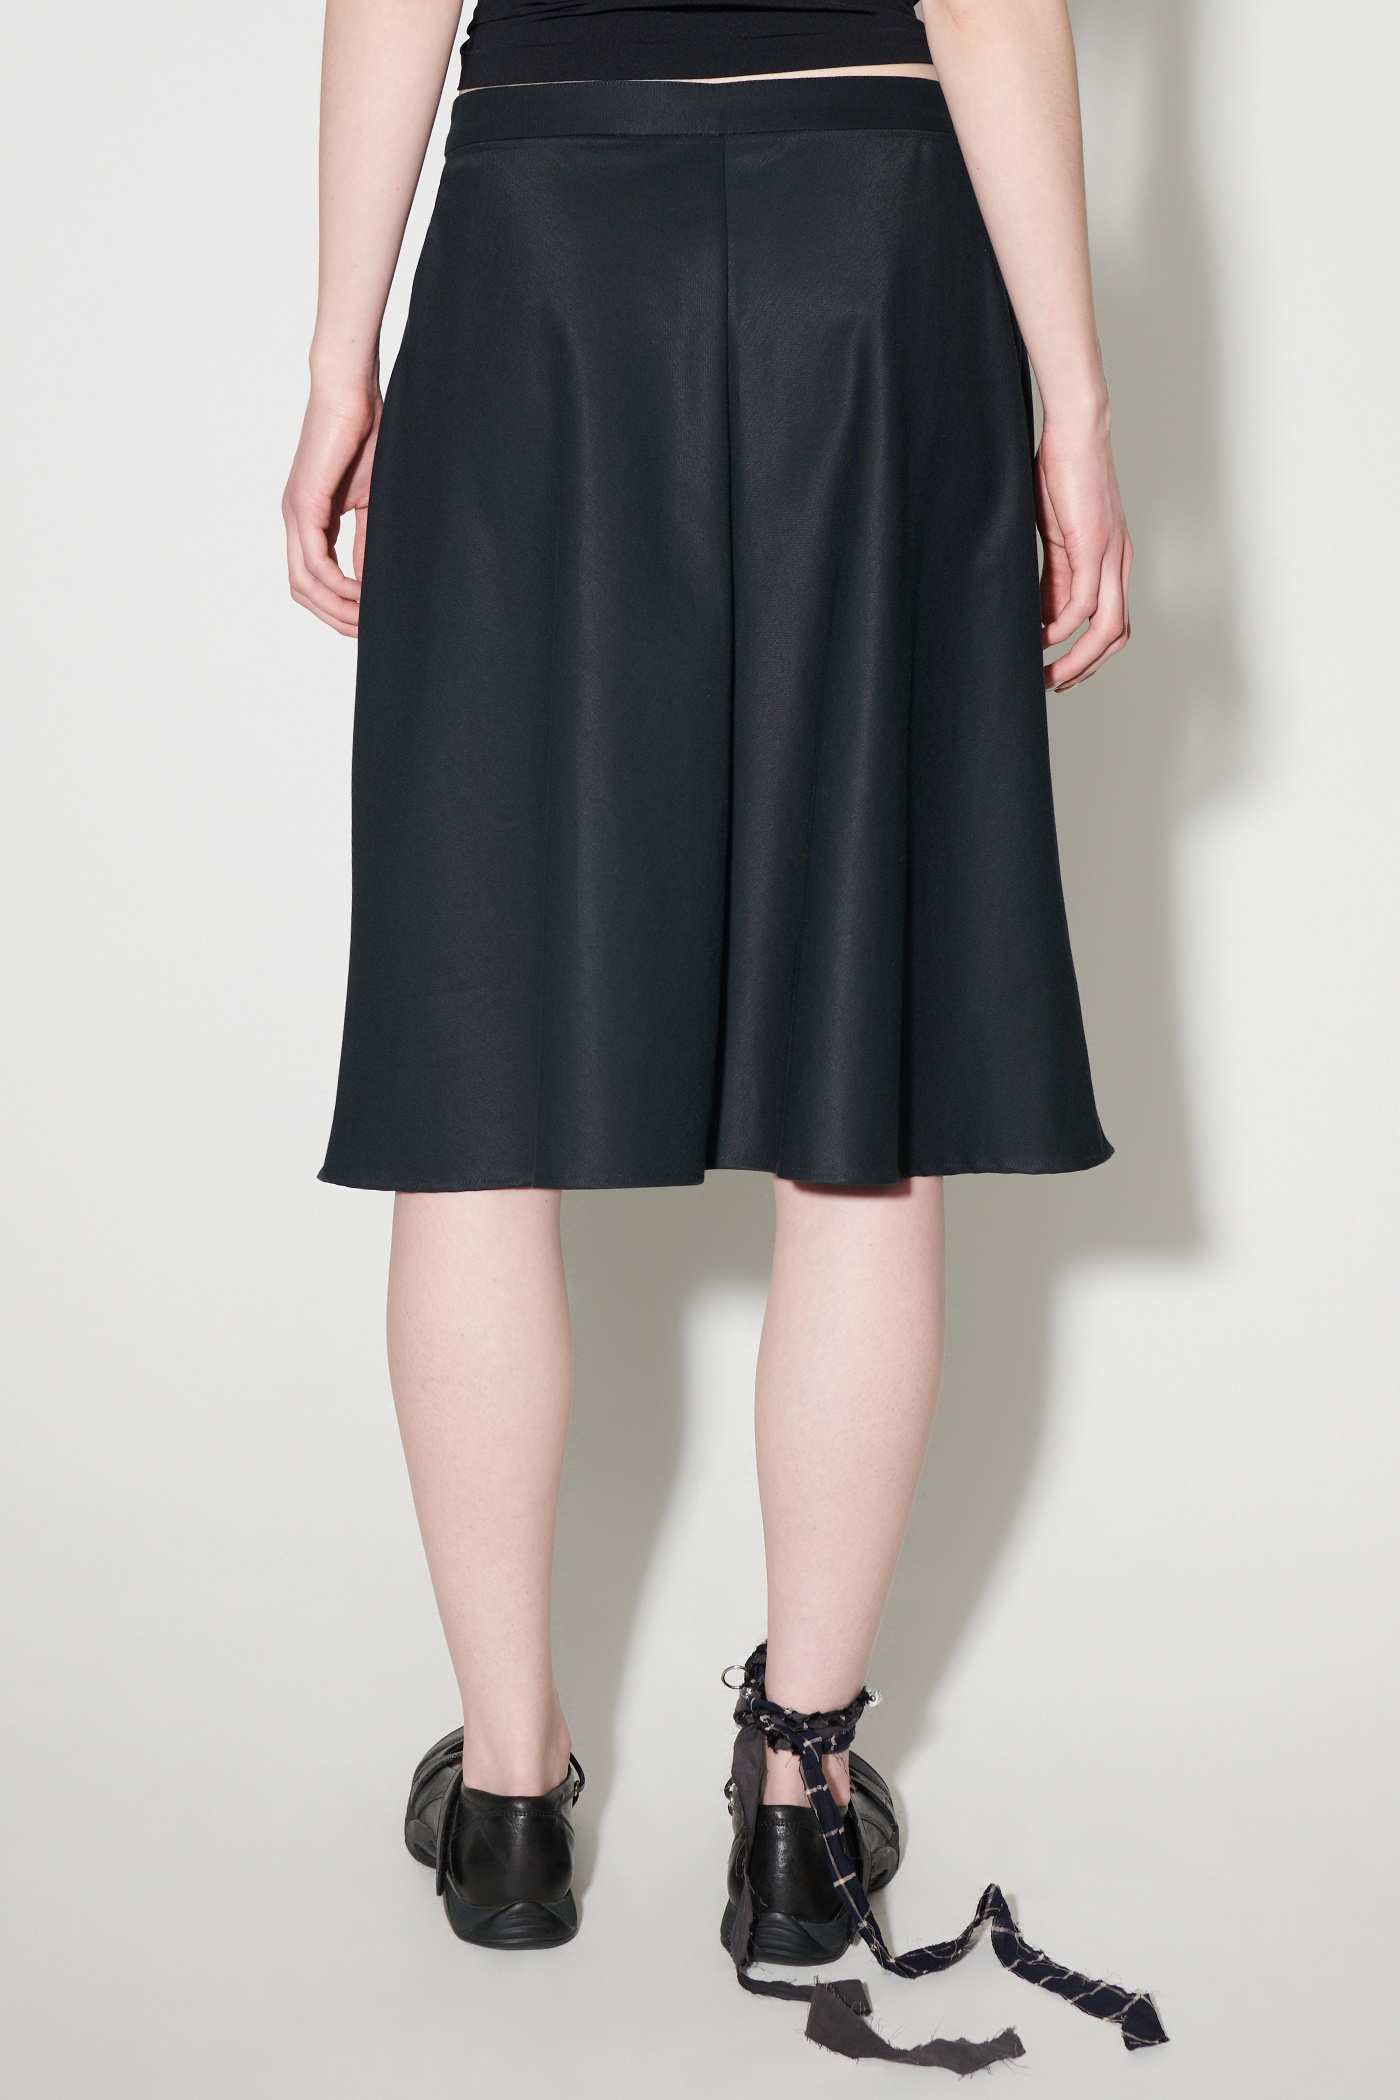 Curtain Skirt Deluxe Black Exquisite Wool - 6